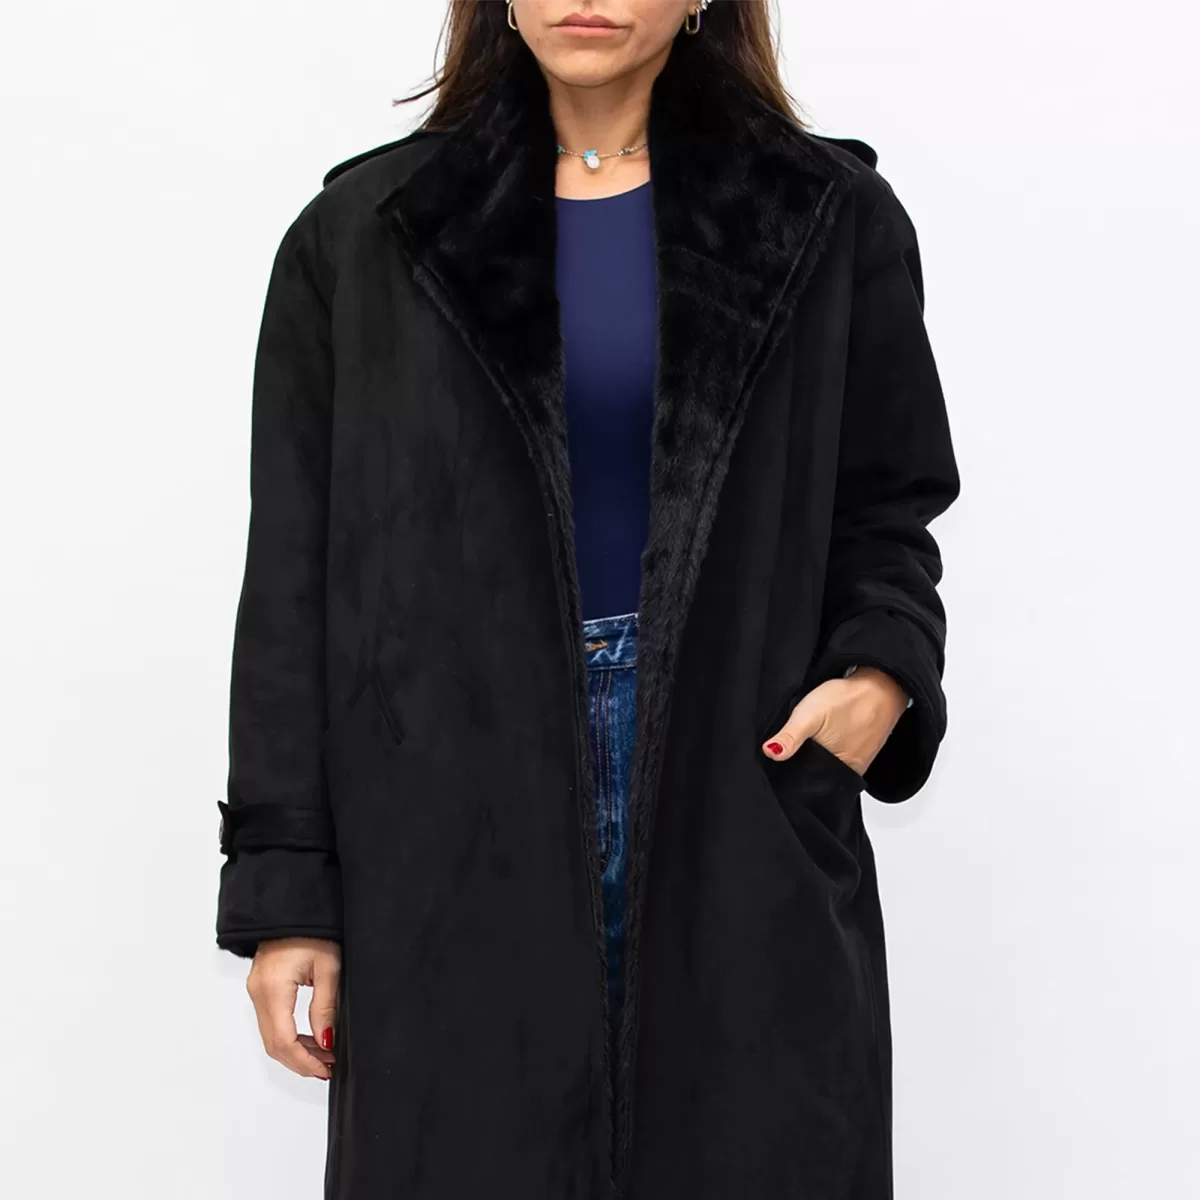 Black Fur Coat Suede with Fur lining Belted Jacket